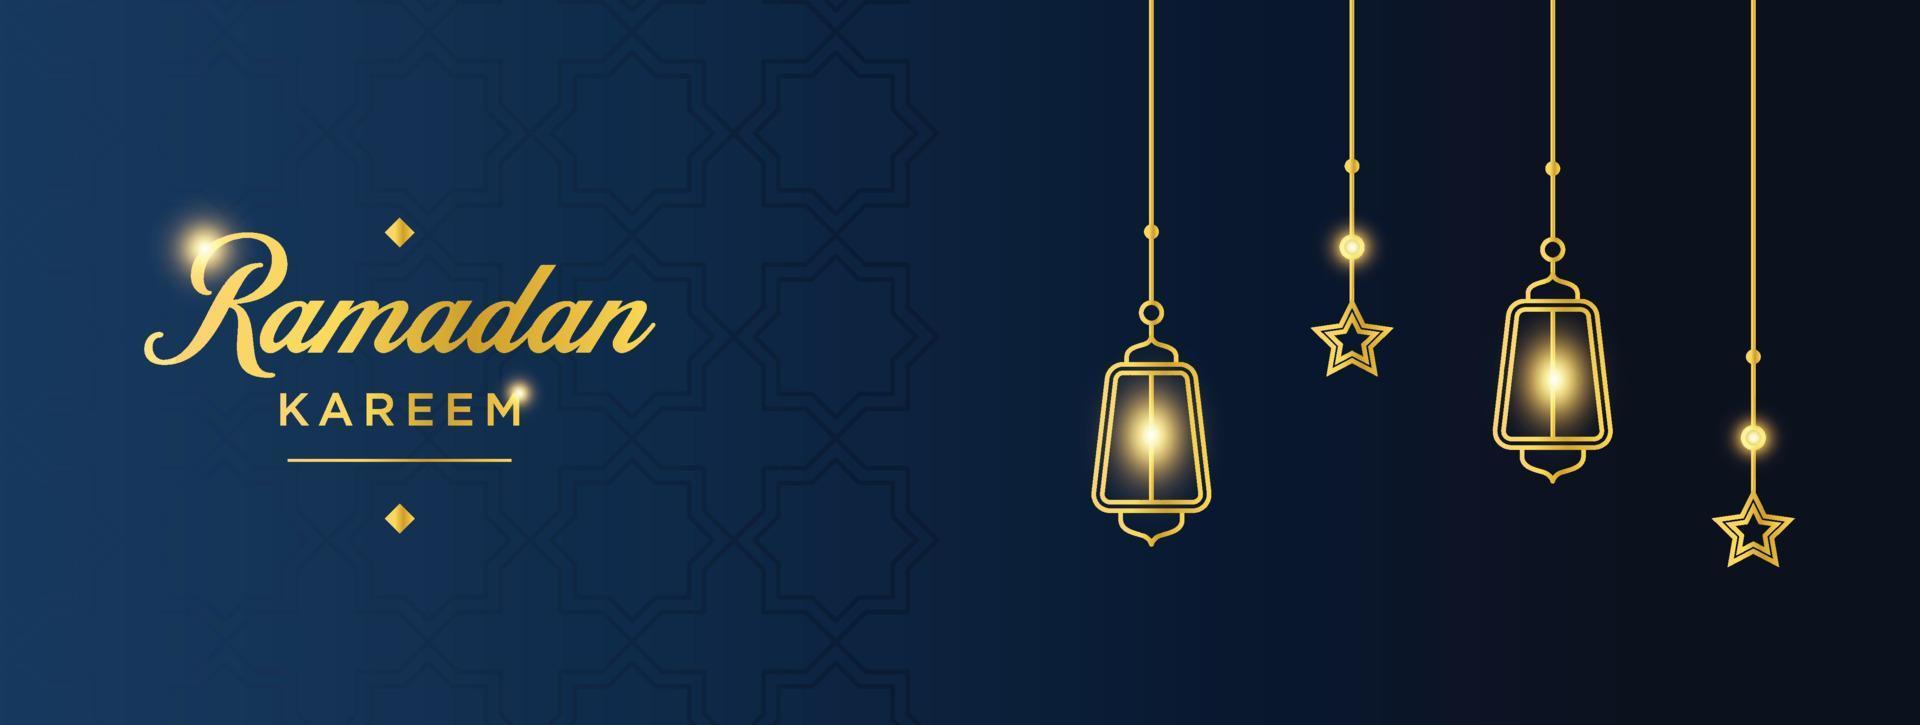 Ramadan Kareem Banner. Ramadan Islamic Holiday Graphic Template with Gold Ornament and Light vector